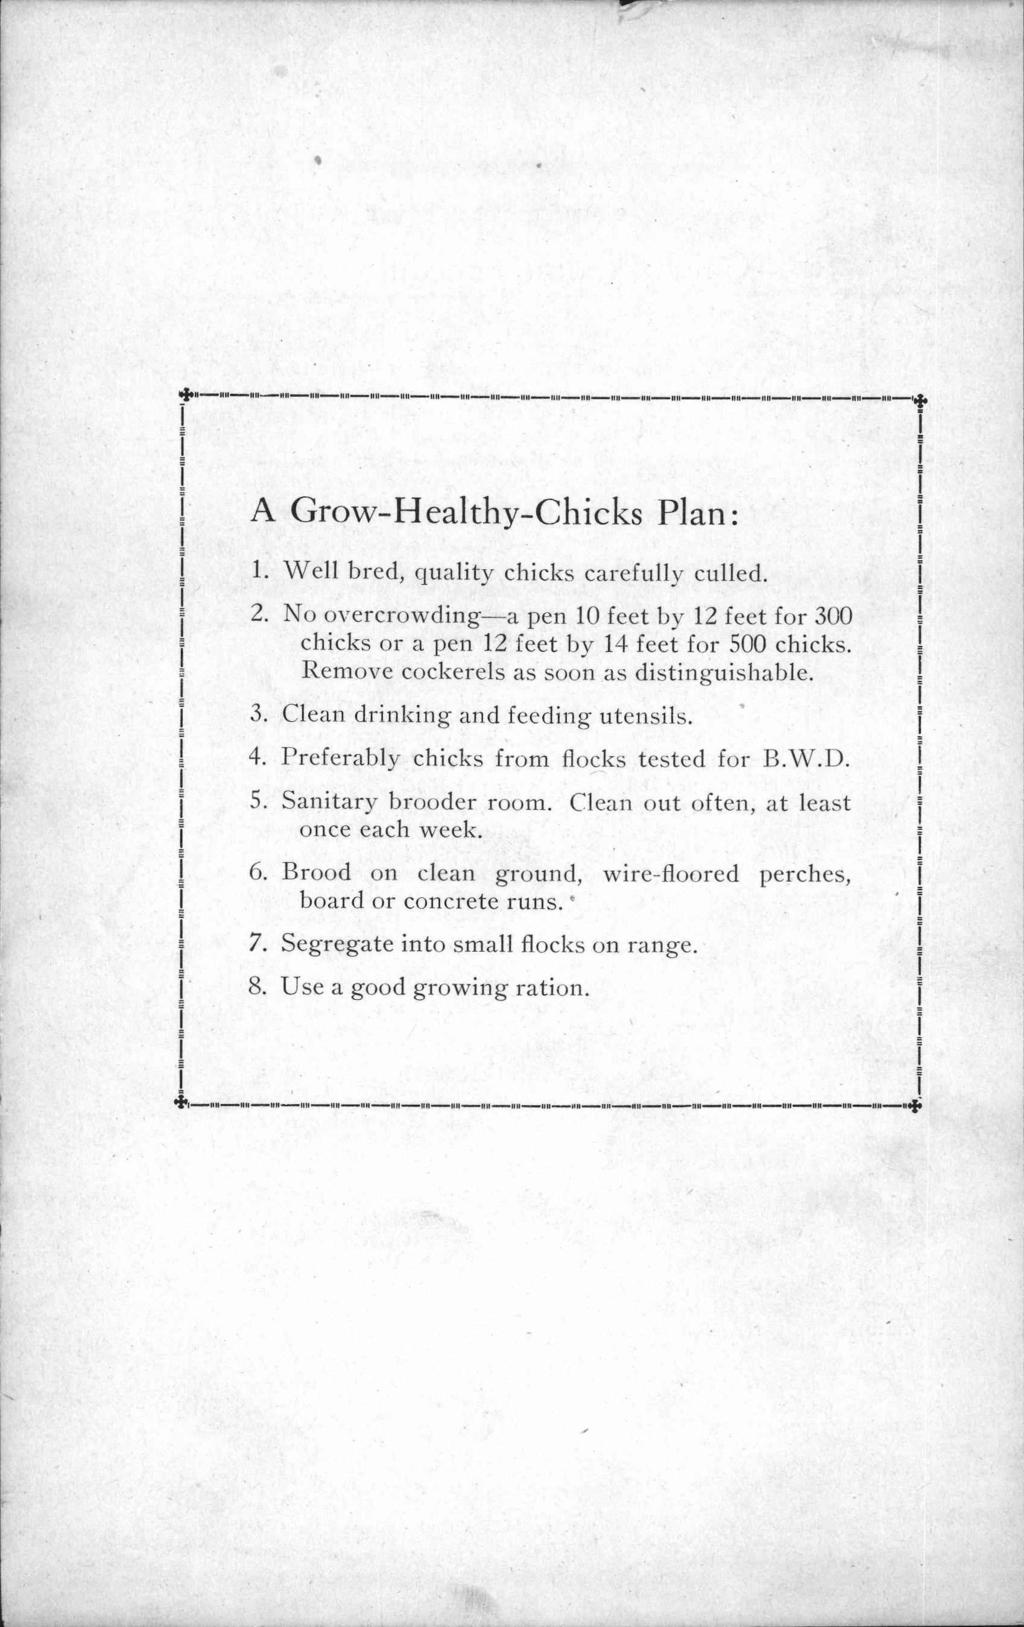 1 11 I 1 II 11 1 A Grow-Healthy-Chicks Plan: Well bred, quality chicks carefully culled. No overcrowdinga pen 10 feet by 12 feet for 300 chicks or a pen 12 feet by 14 feet for 500 chicks.